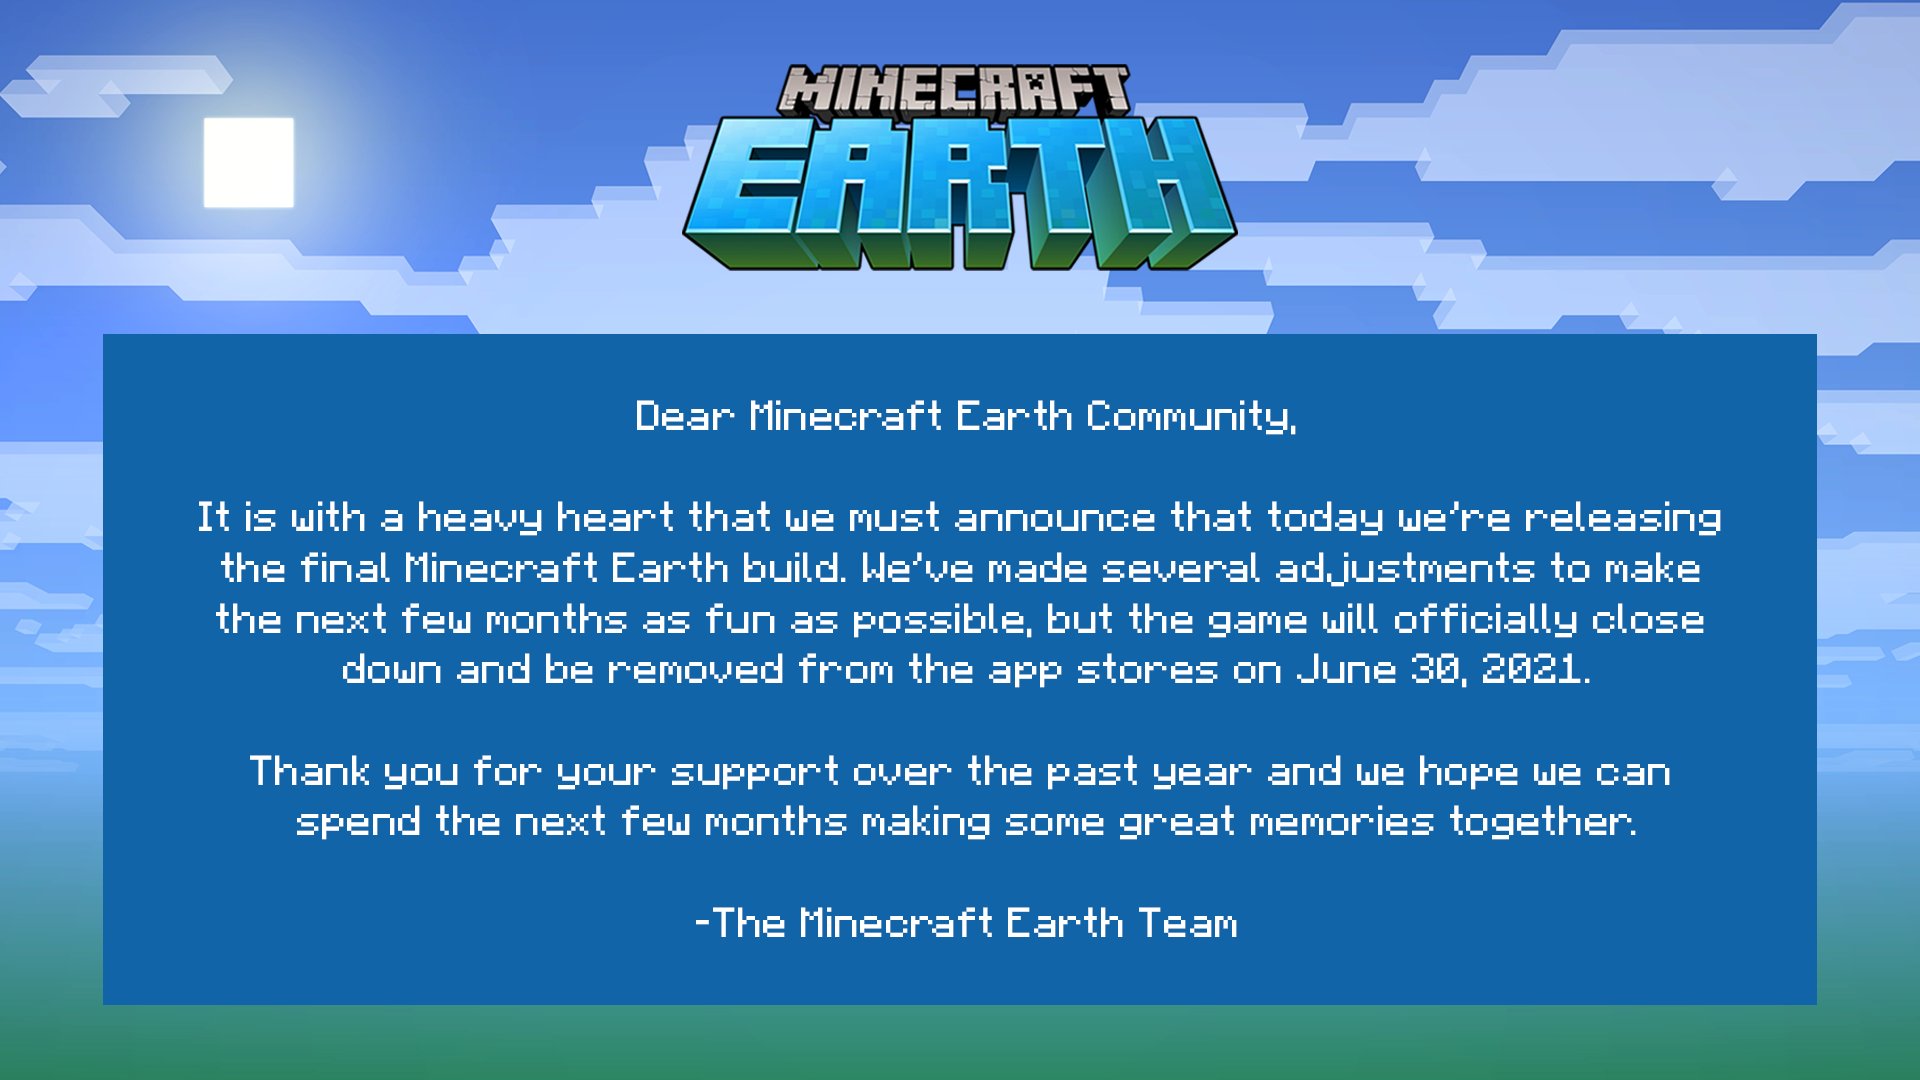 When did Minecraft Earth shut down?